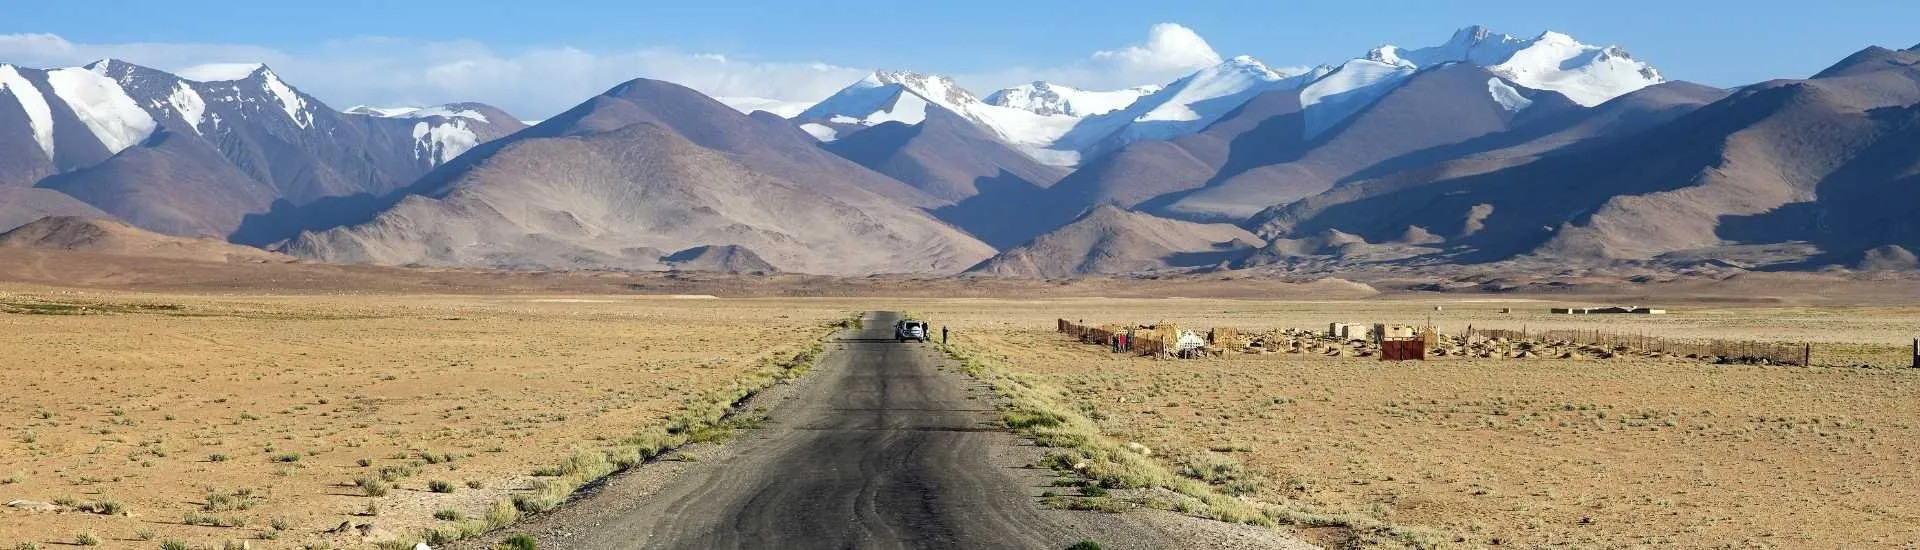 Pamir mountains, Tajikistan — Shutterstock